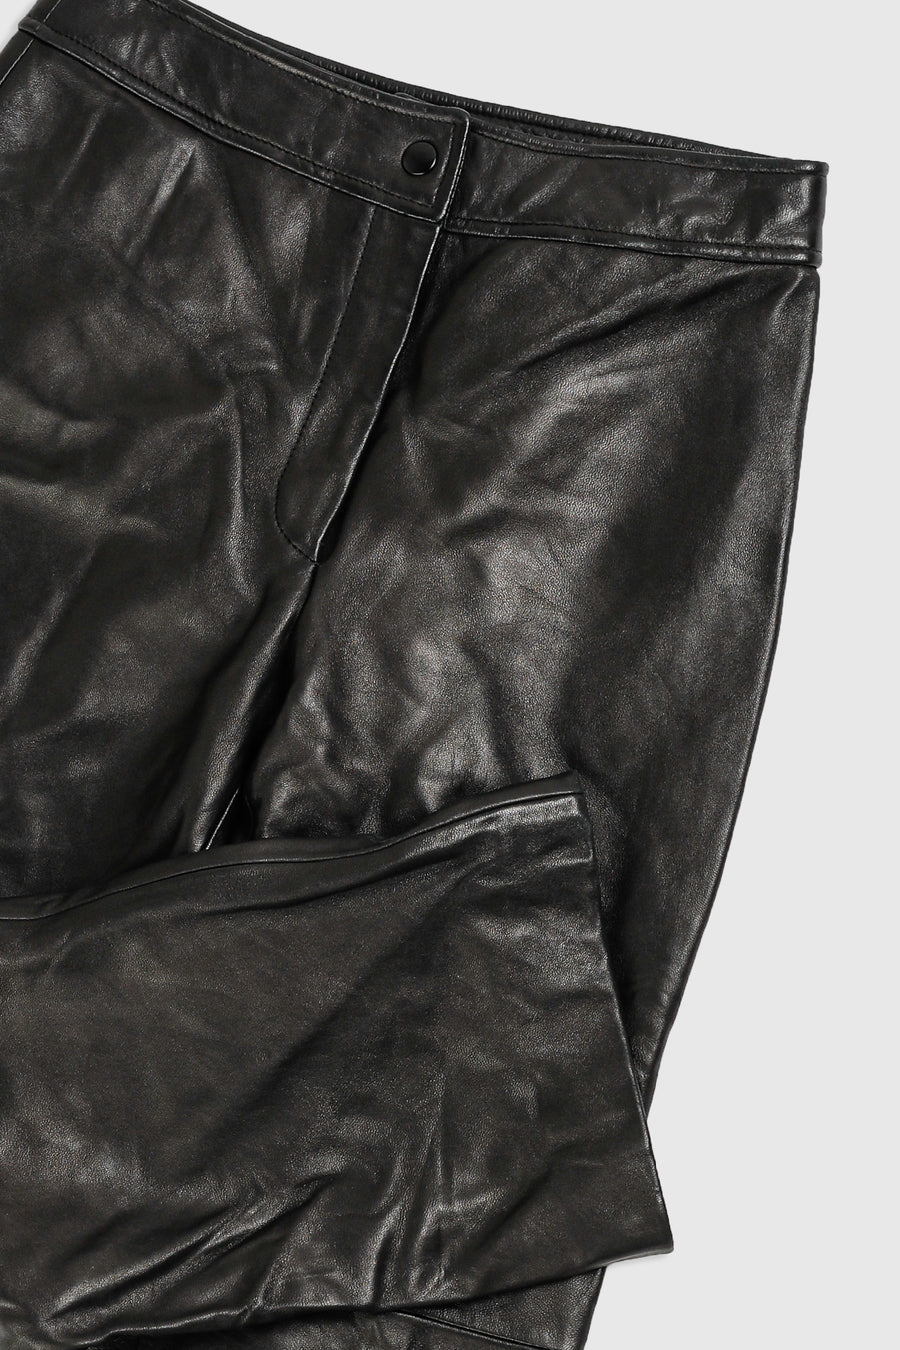 Vintage Leather Pants - Women's XS